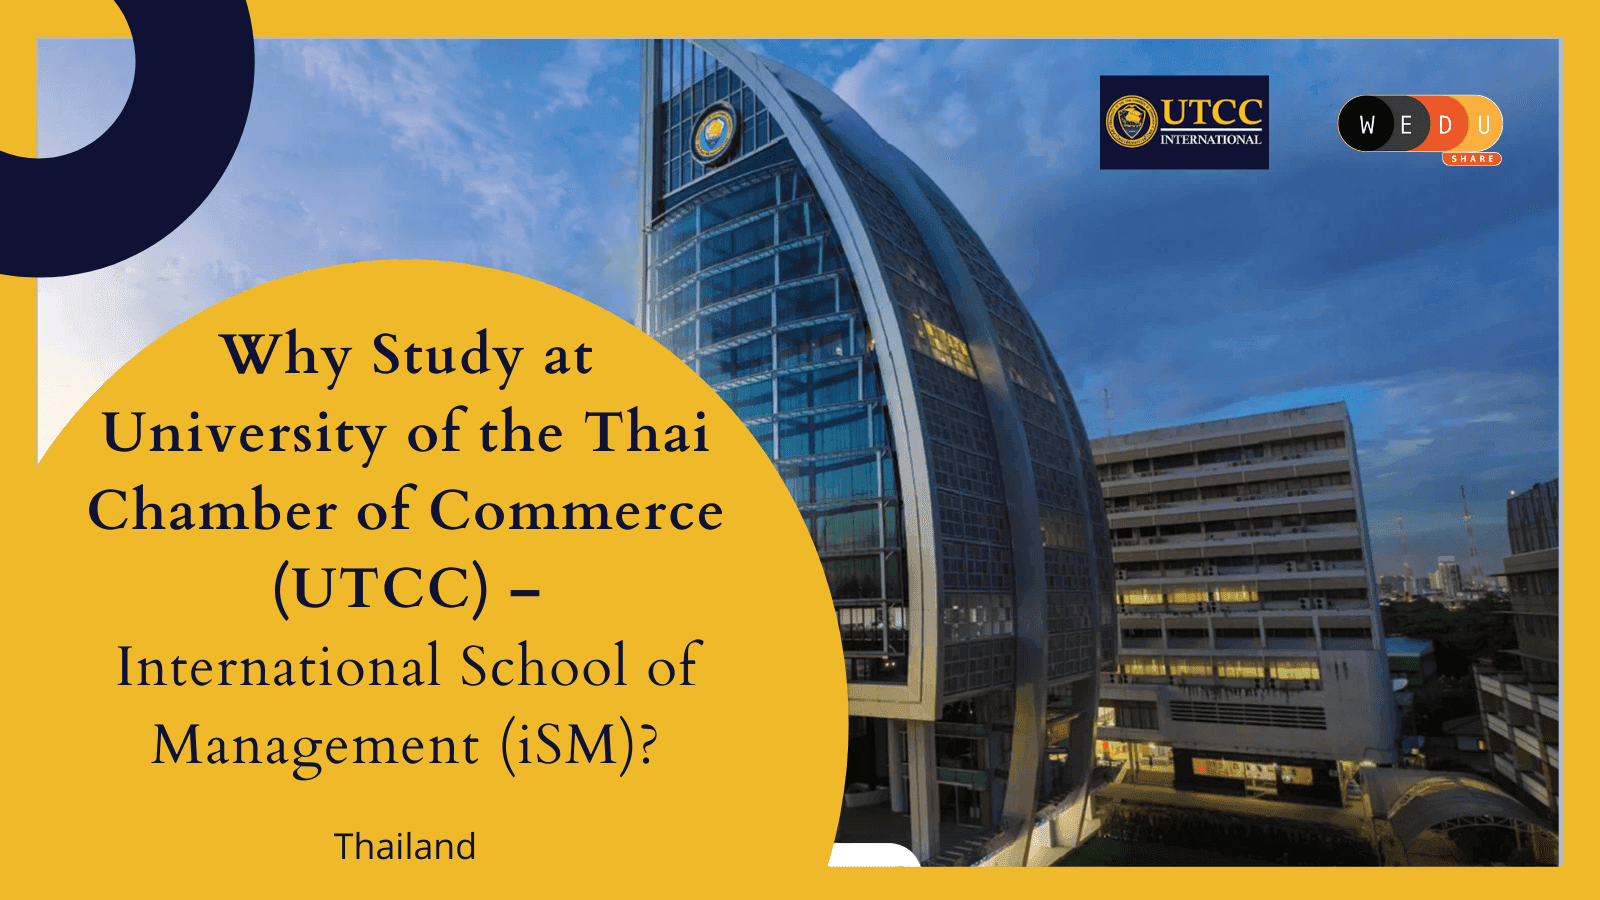 University of the Thai Chamber of Commerce (UTCC) – International School of Management (iSM)